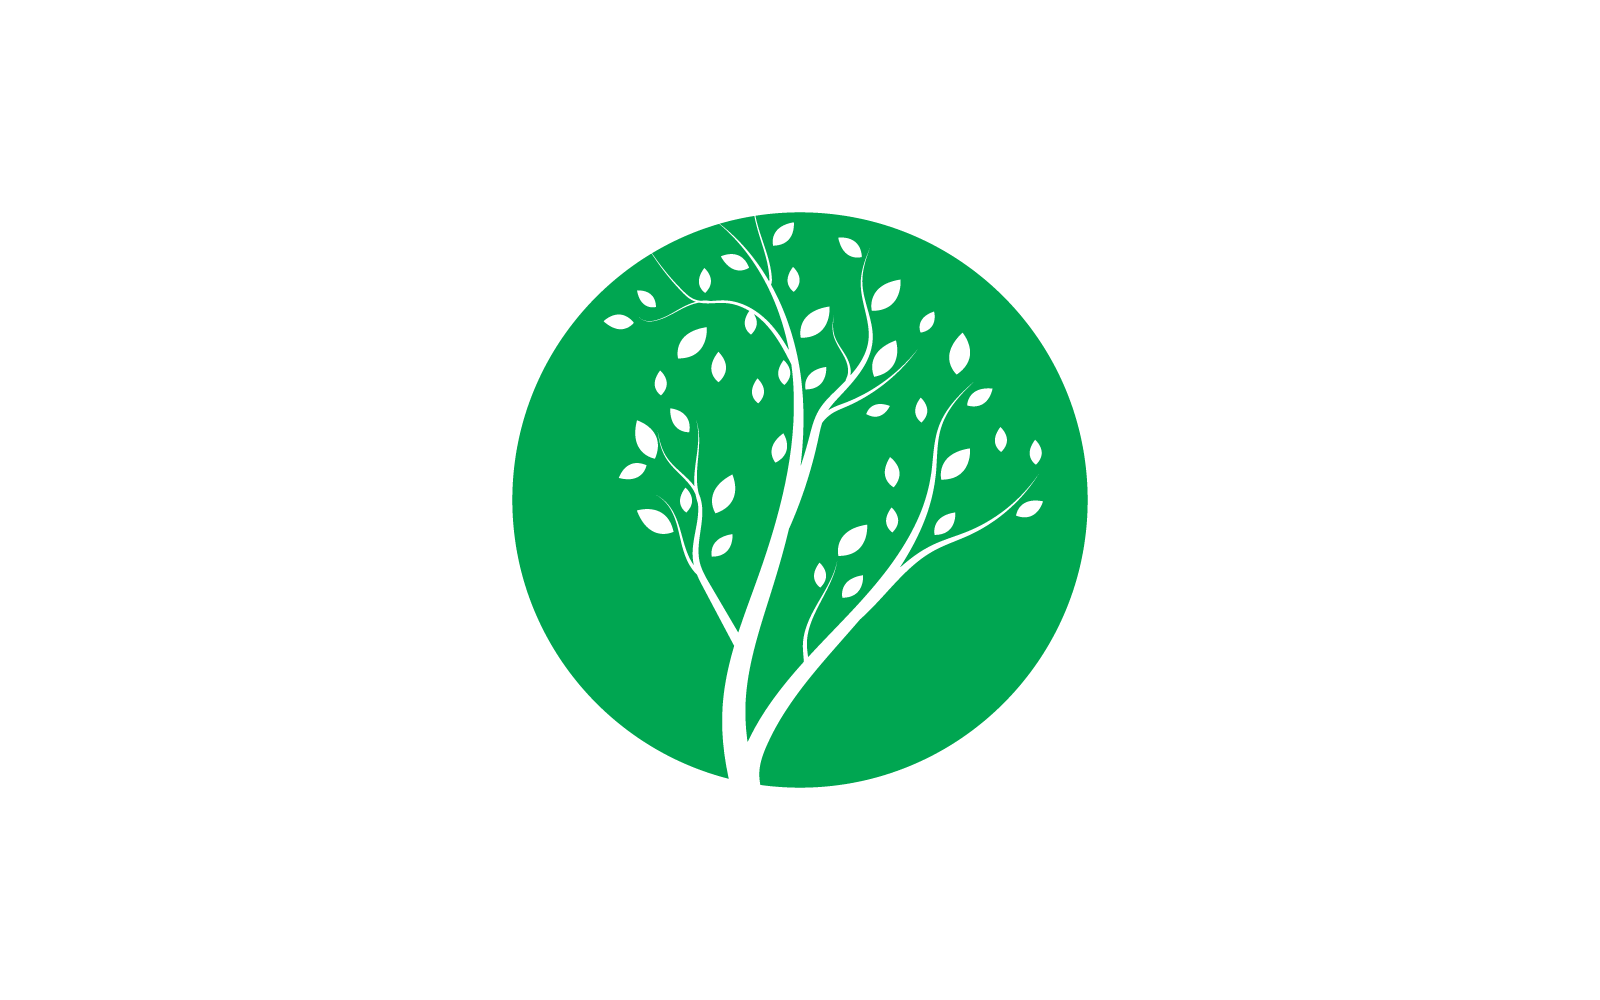 Logo Tree nature illustration design template